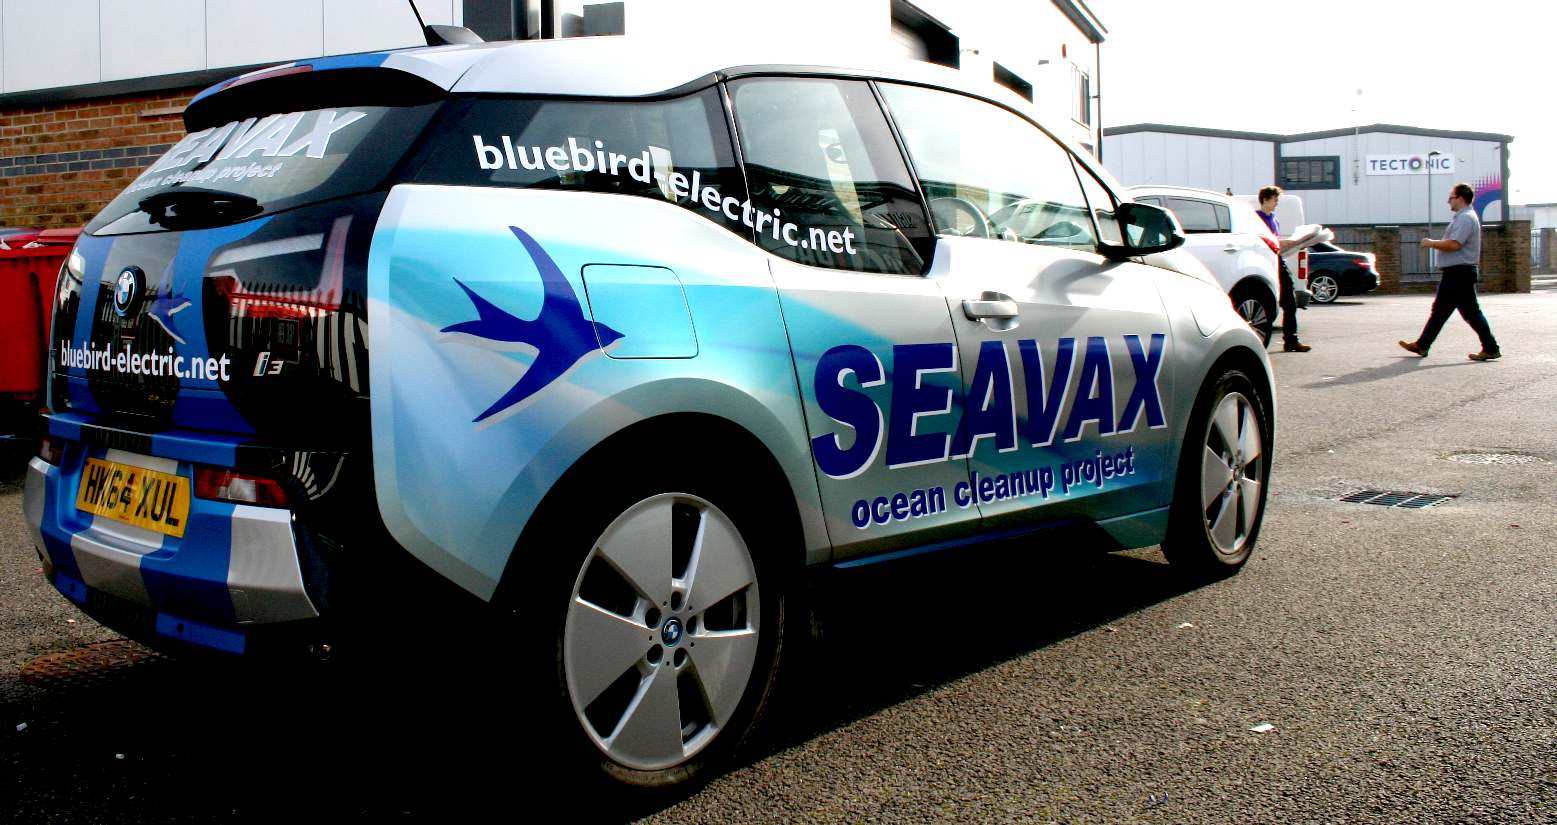 BMW i3 electric car vinyl wrapped with SeaVax and bluebird logos